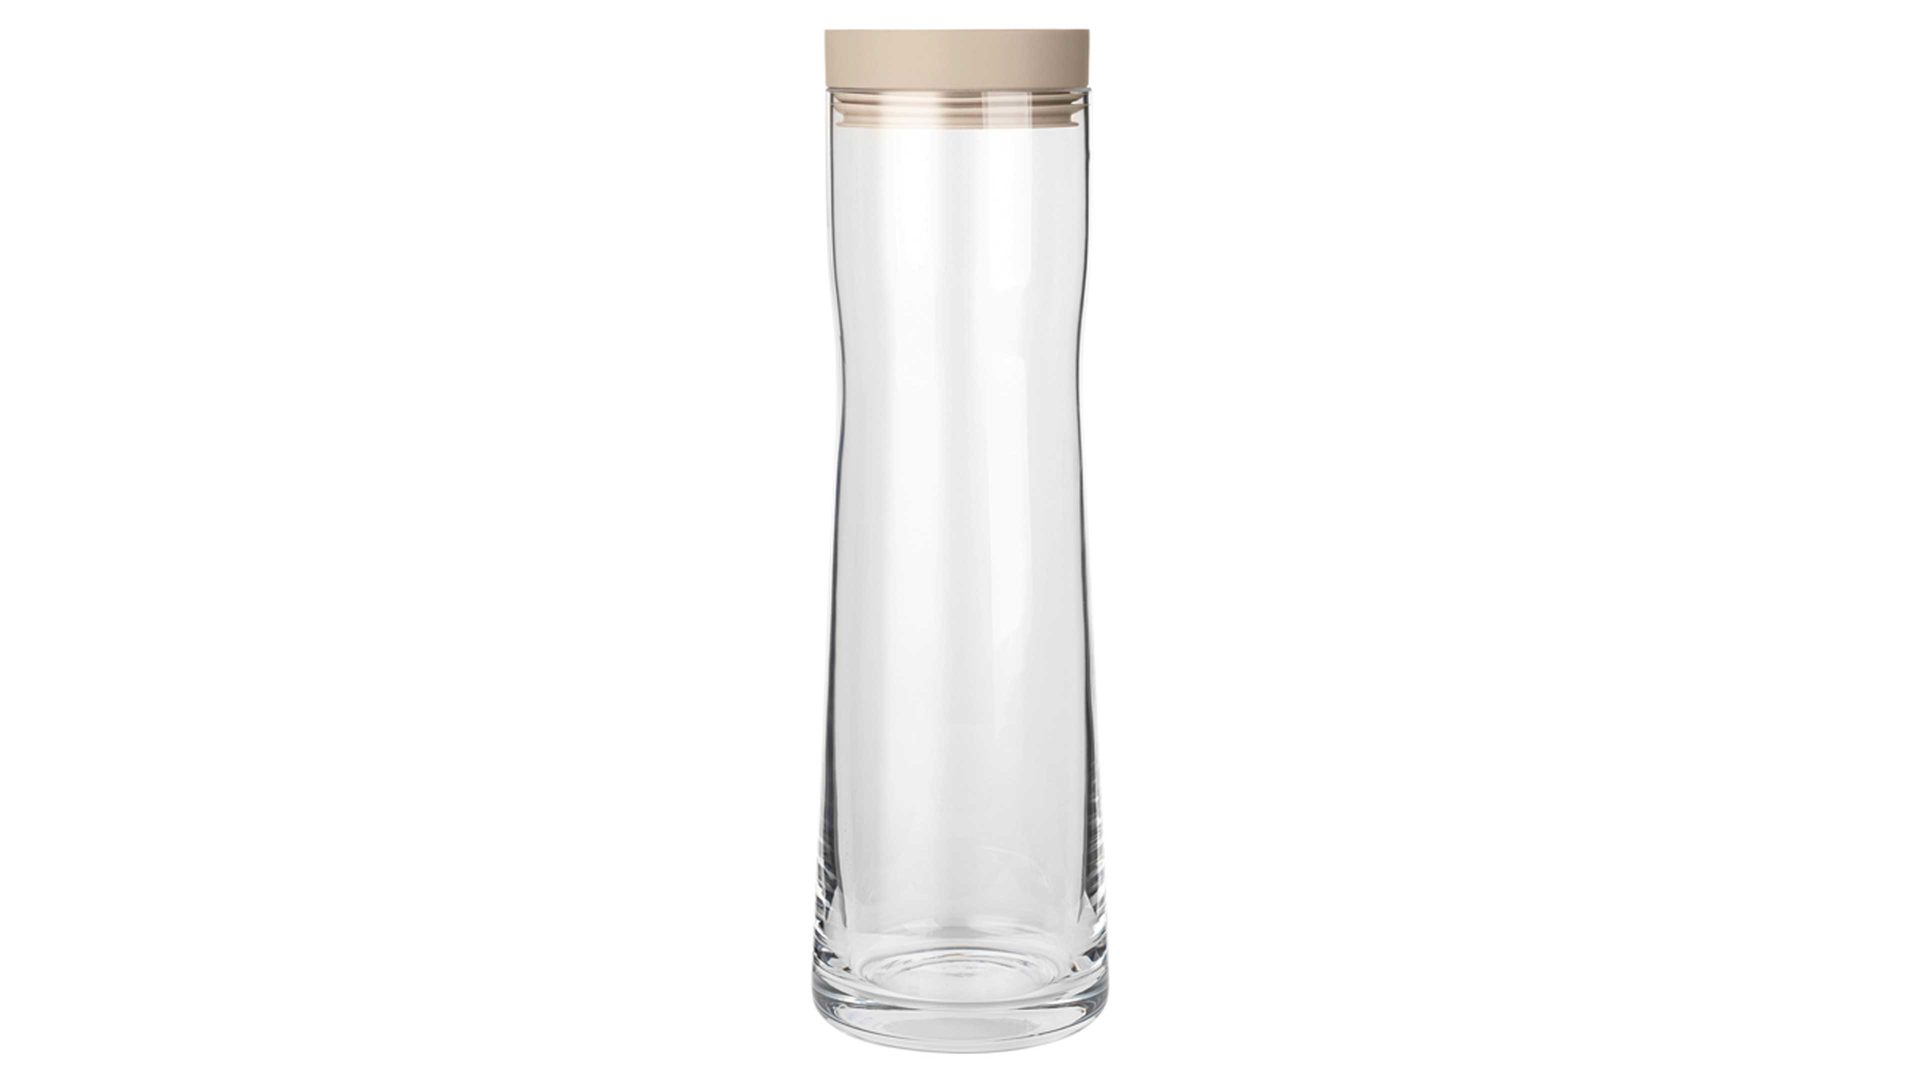 Karaffe Blomus aus Glas in Beige blomus Wasserkaraffe Splash sandbeiges Silikon Nomad, Edelstahl & Klarglas – ca. 1000 ml